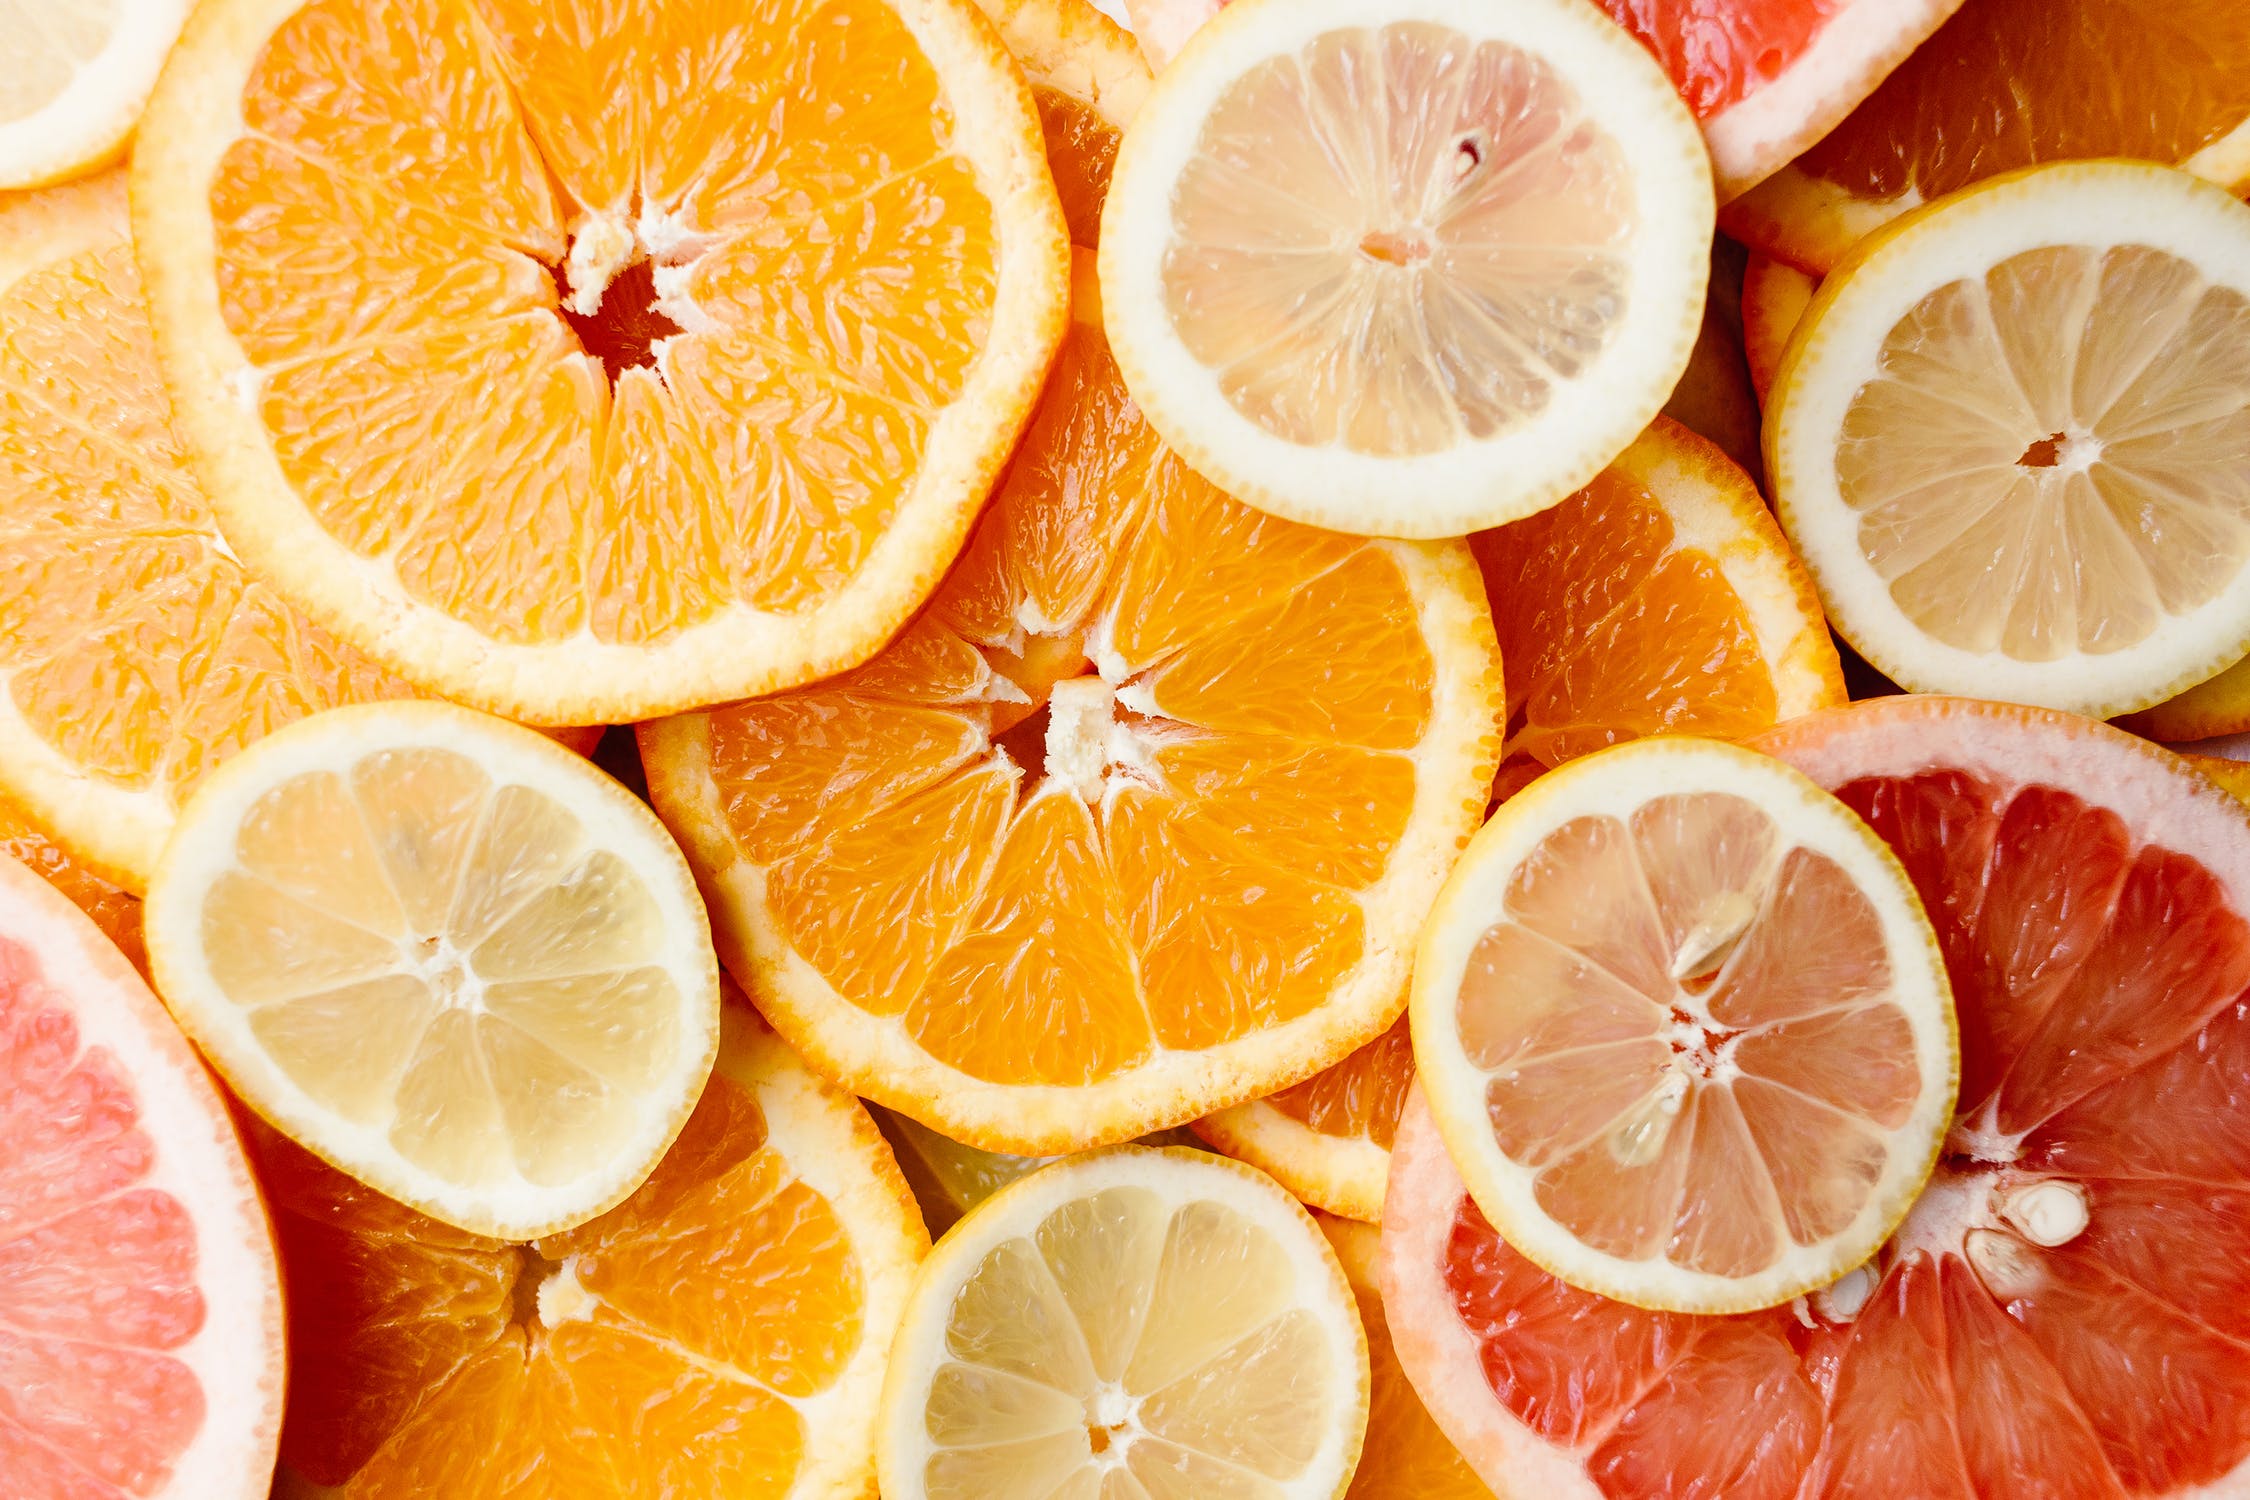 A photo of freshly-sliced oranges